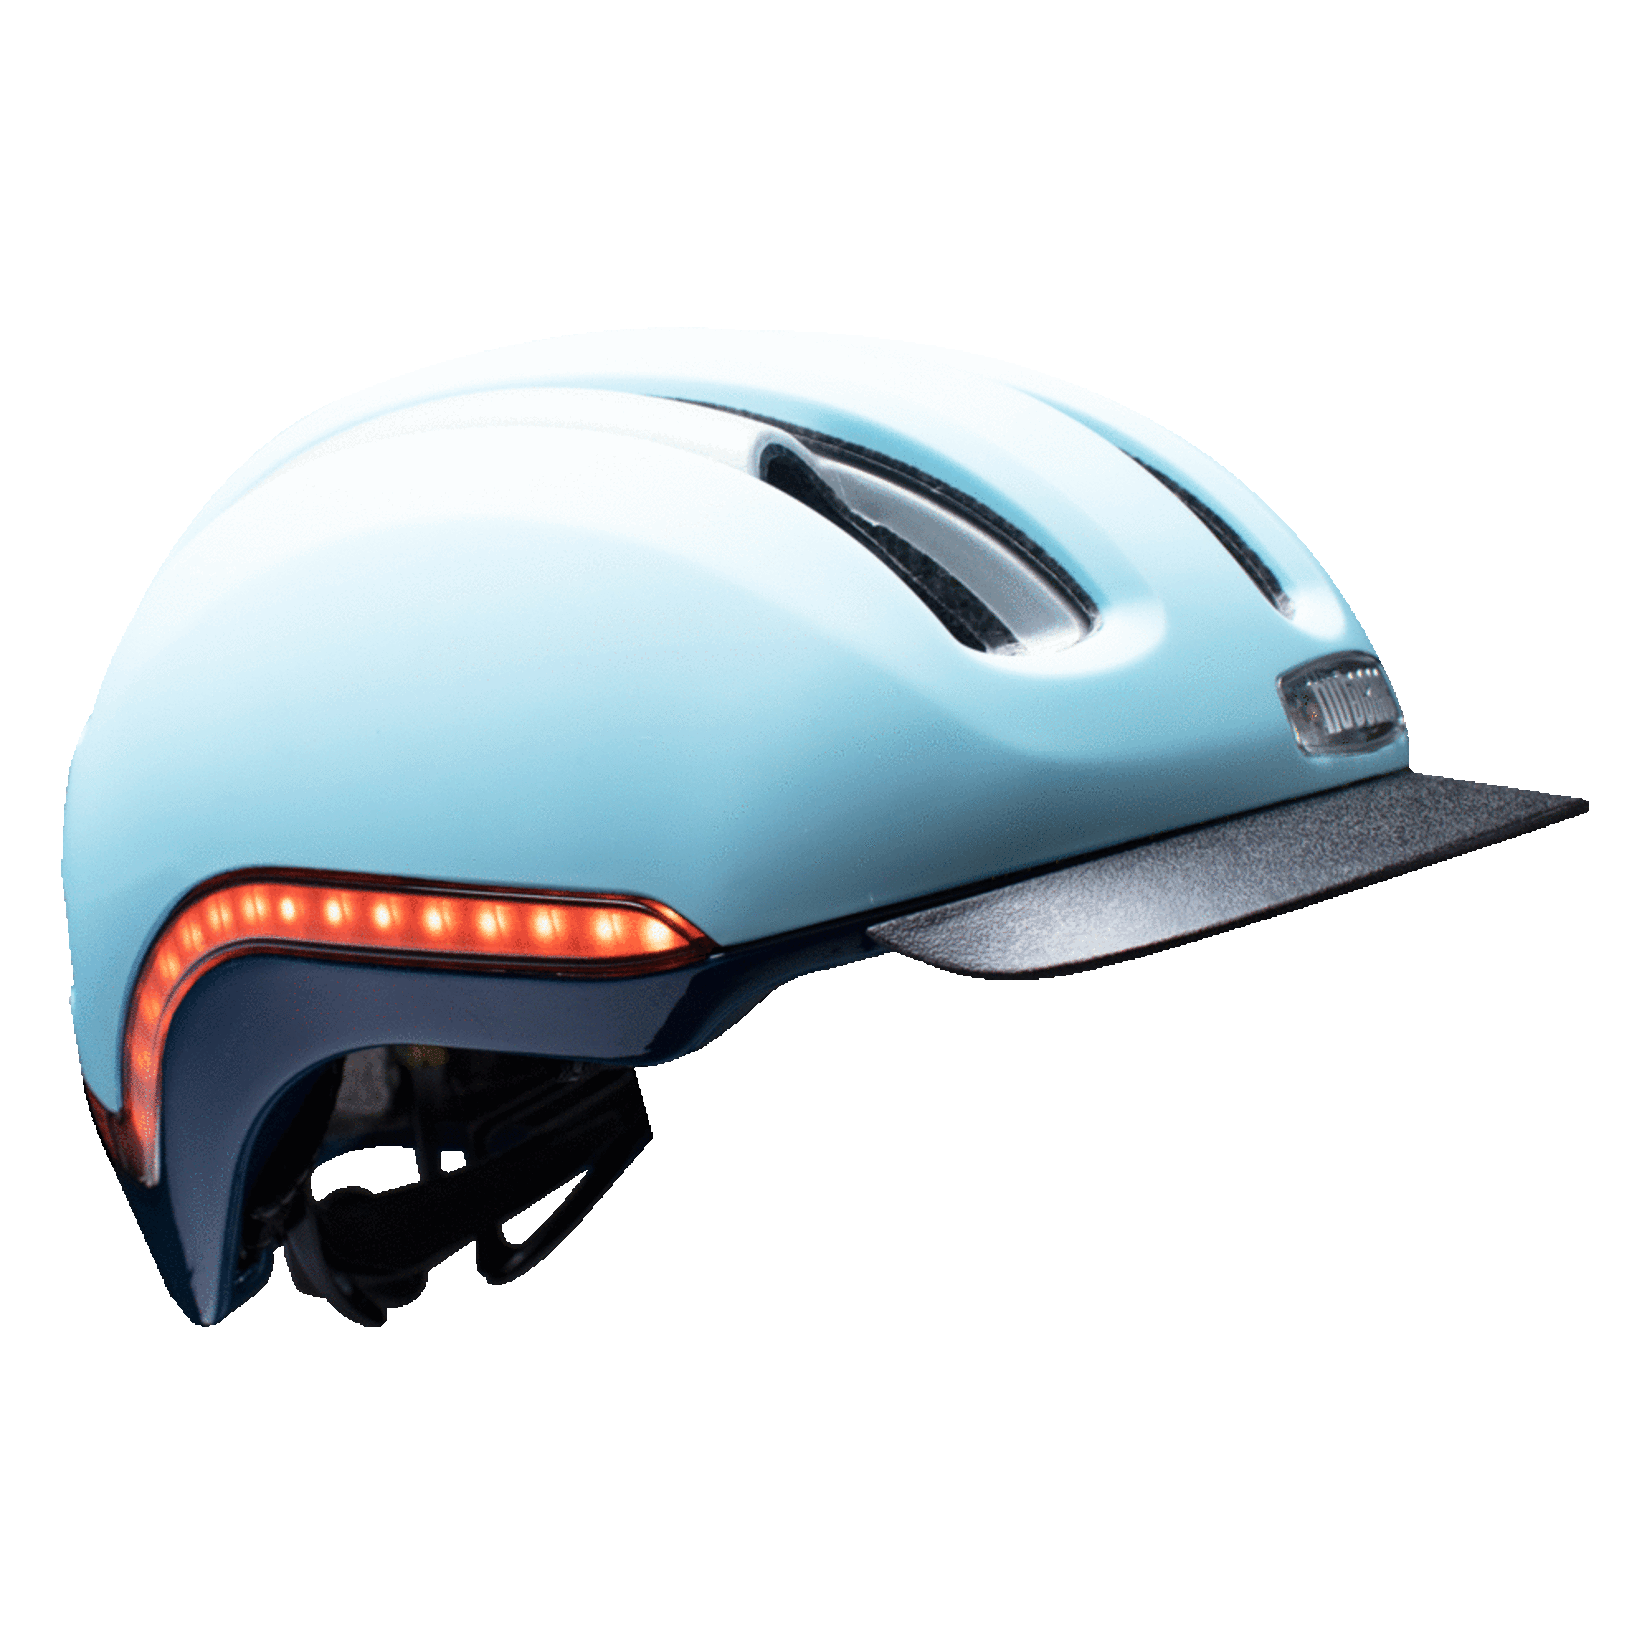 Nutcase Nutcase Vio Helmet with MIPS and Light